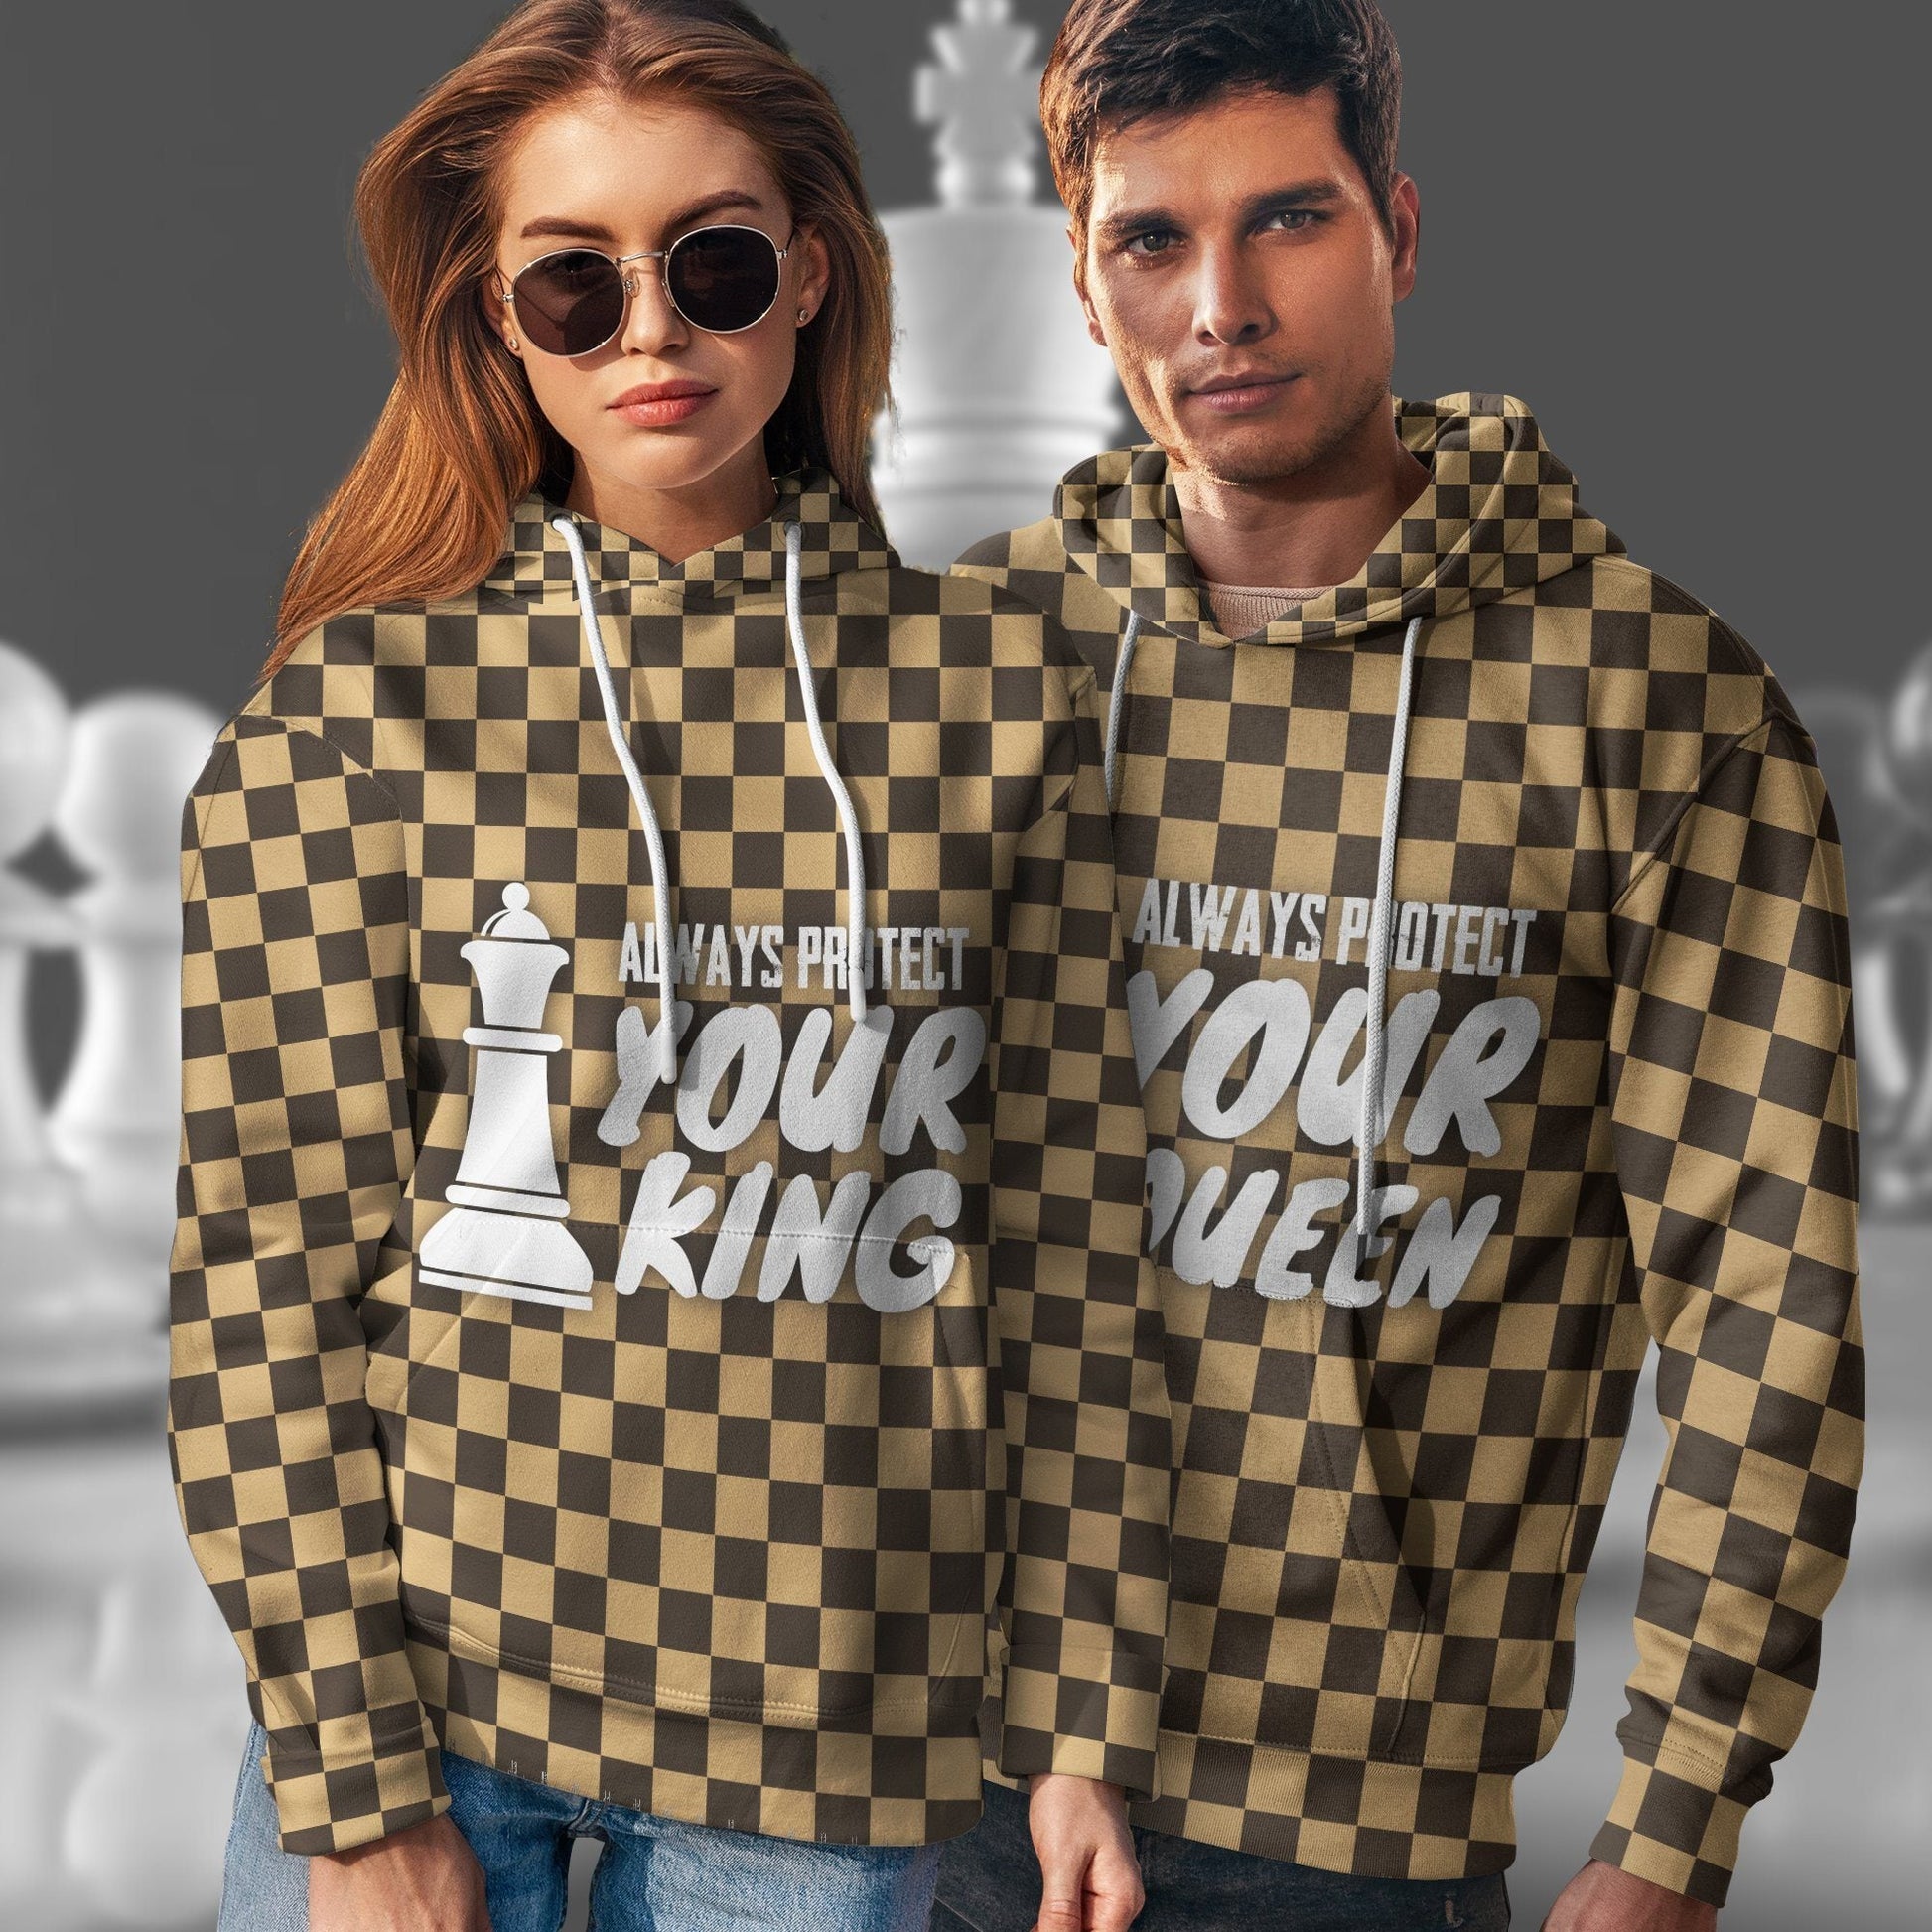 Gearhuman 3D King Chessboard Couple Tshirt Hoodie Apparel GB150116 3D Apparel 